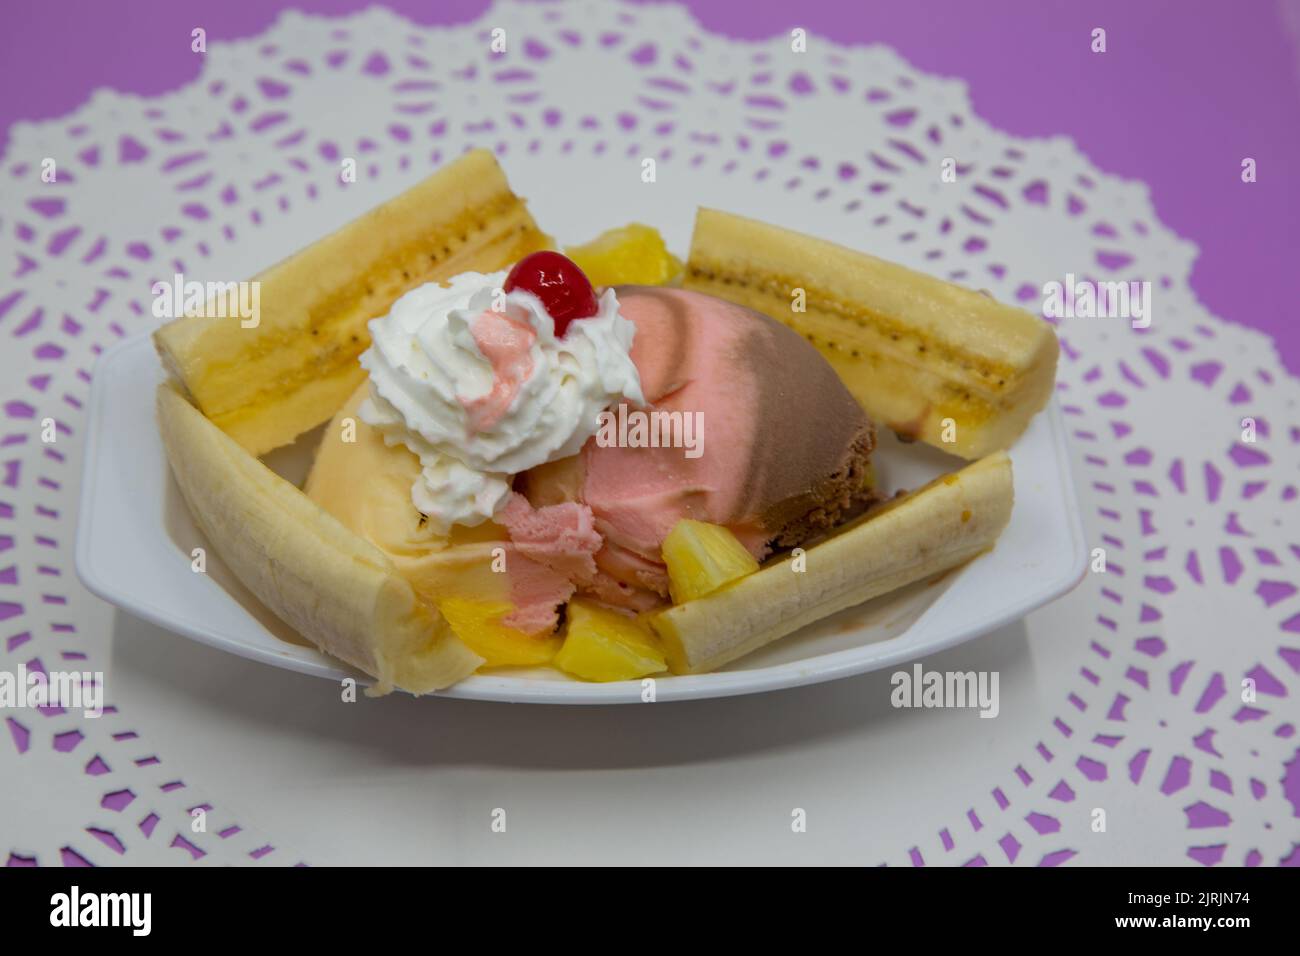 Banana split ice cream sundae on white doily and purple table top. Neapolitan ice cream with whipped creams, bananas, maraschino cherry and pineapple Stock Photo